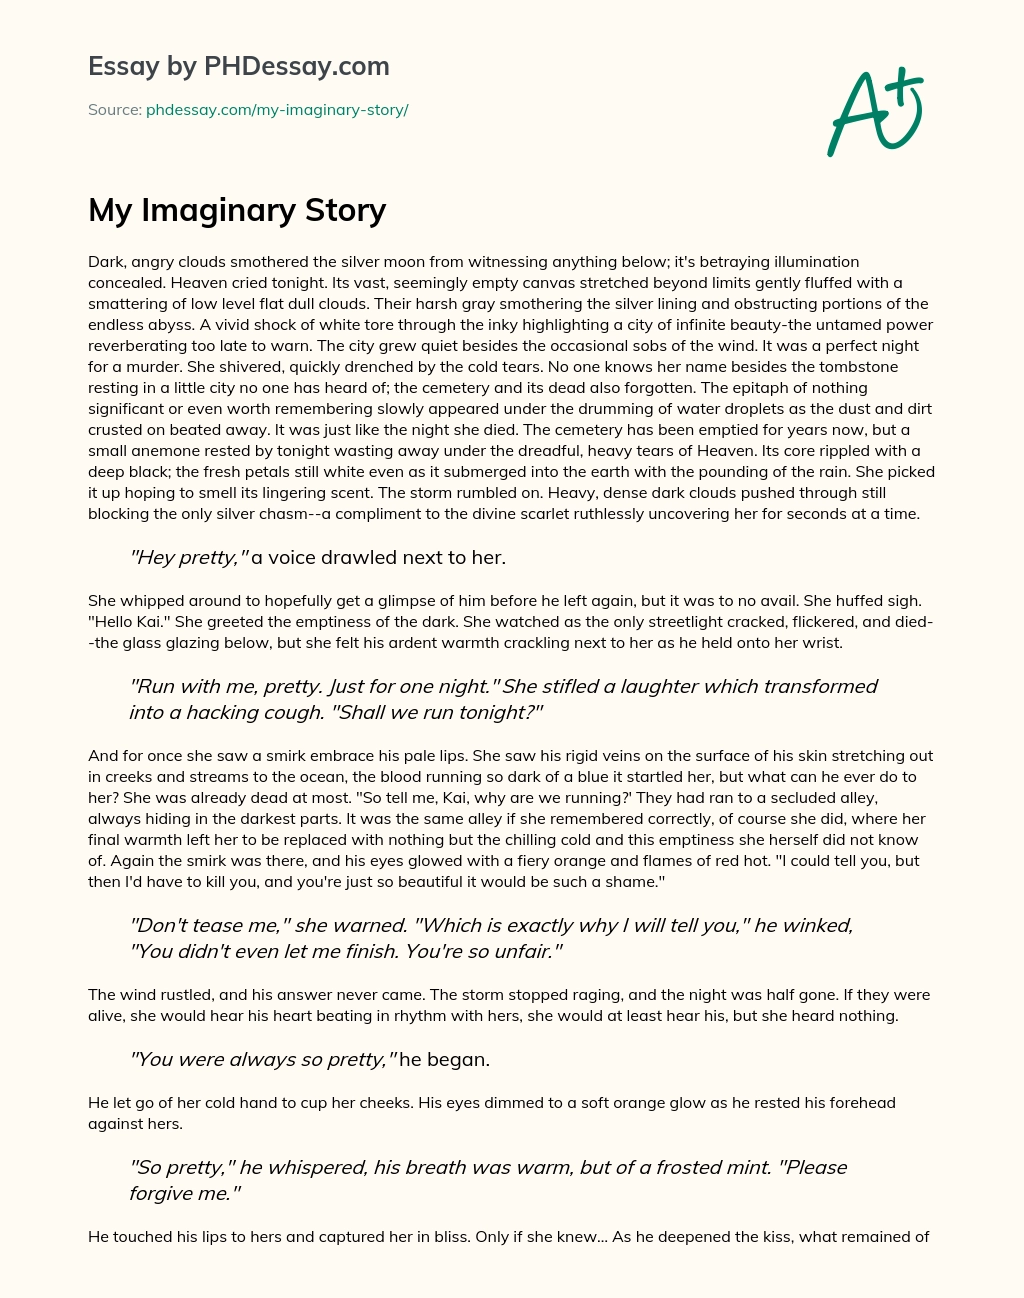 Реферат: Creative Story A Nineties Love Story Essay